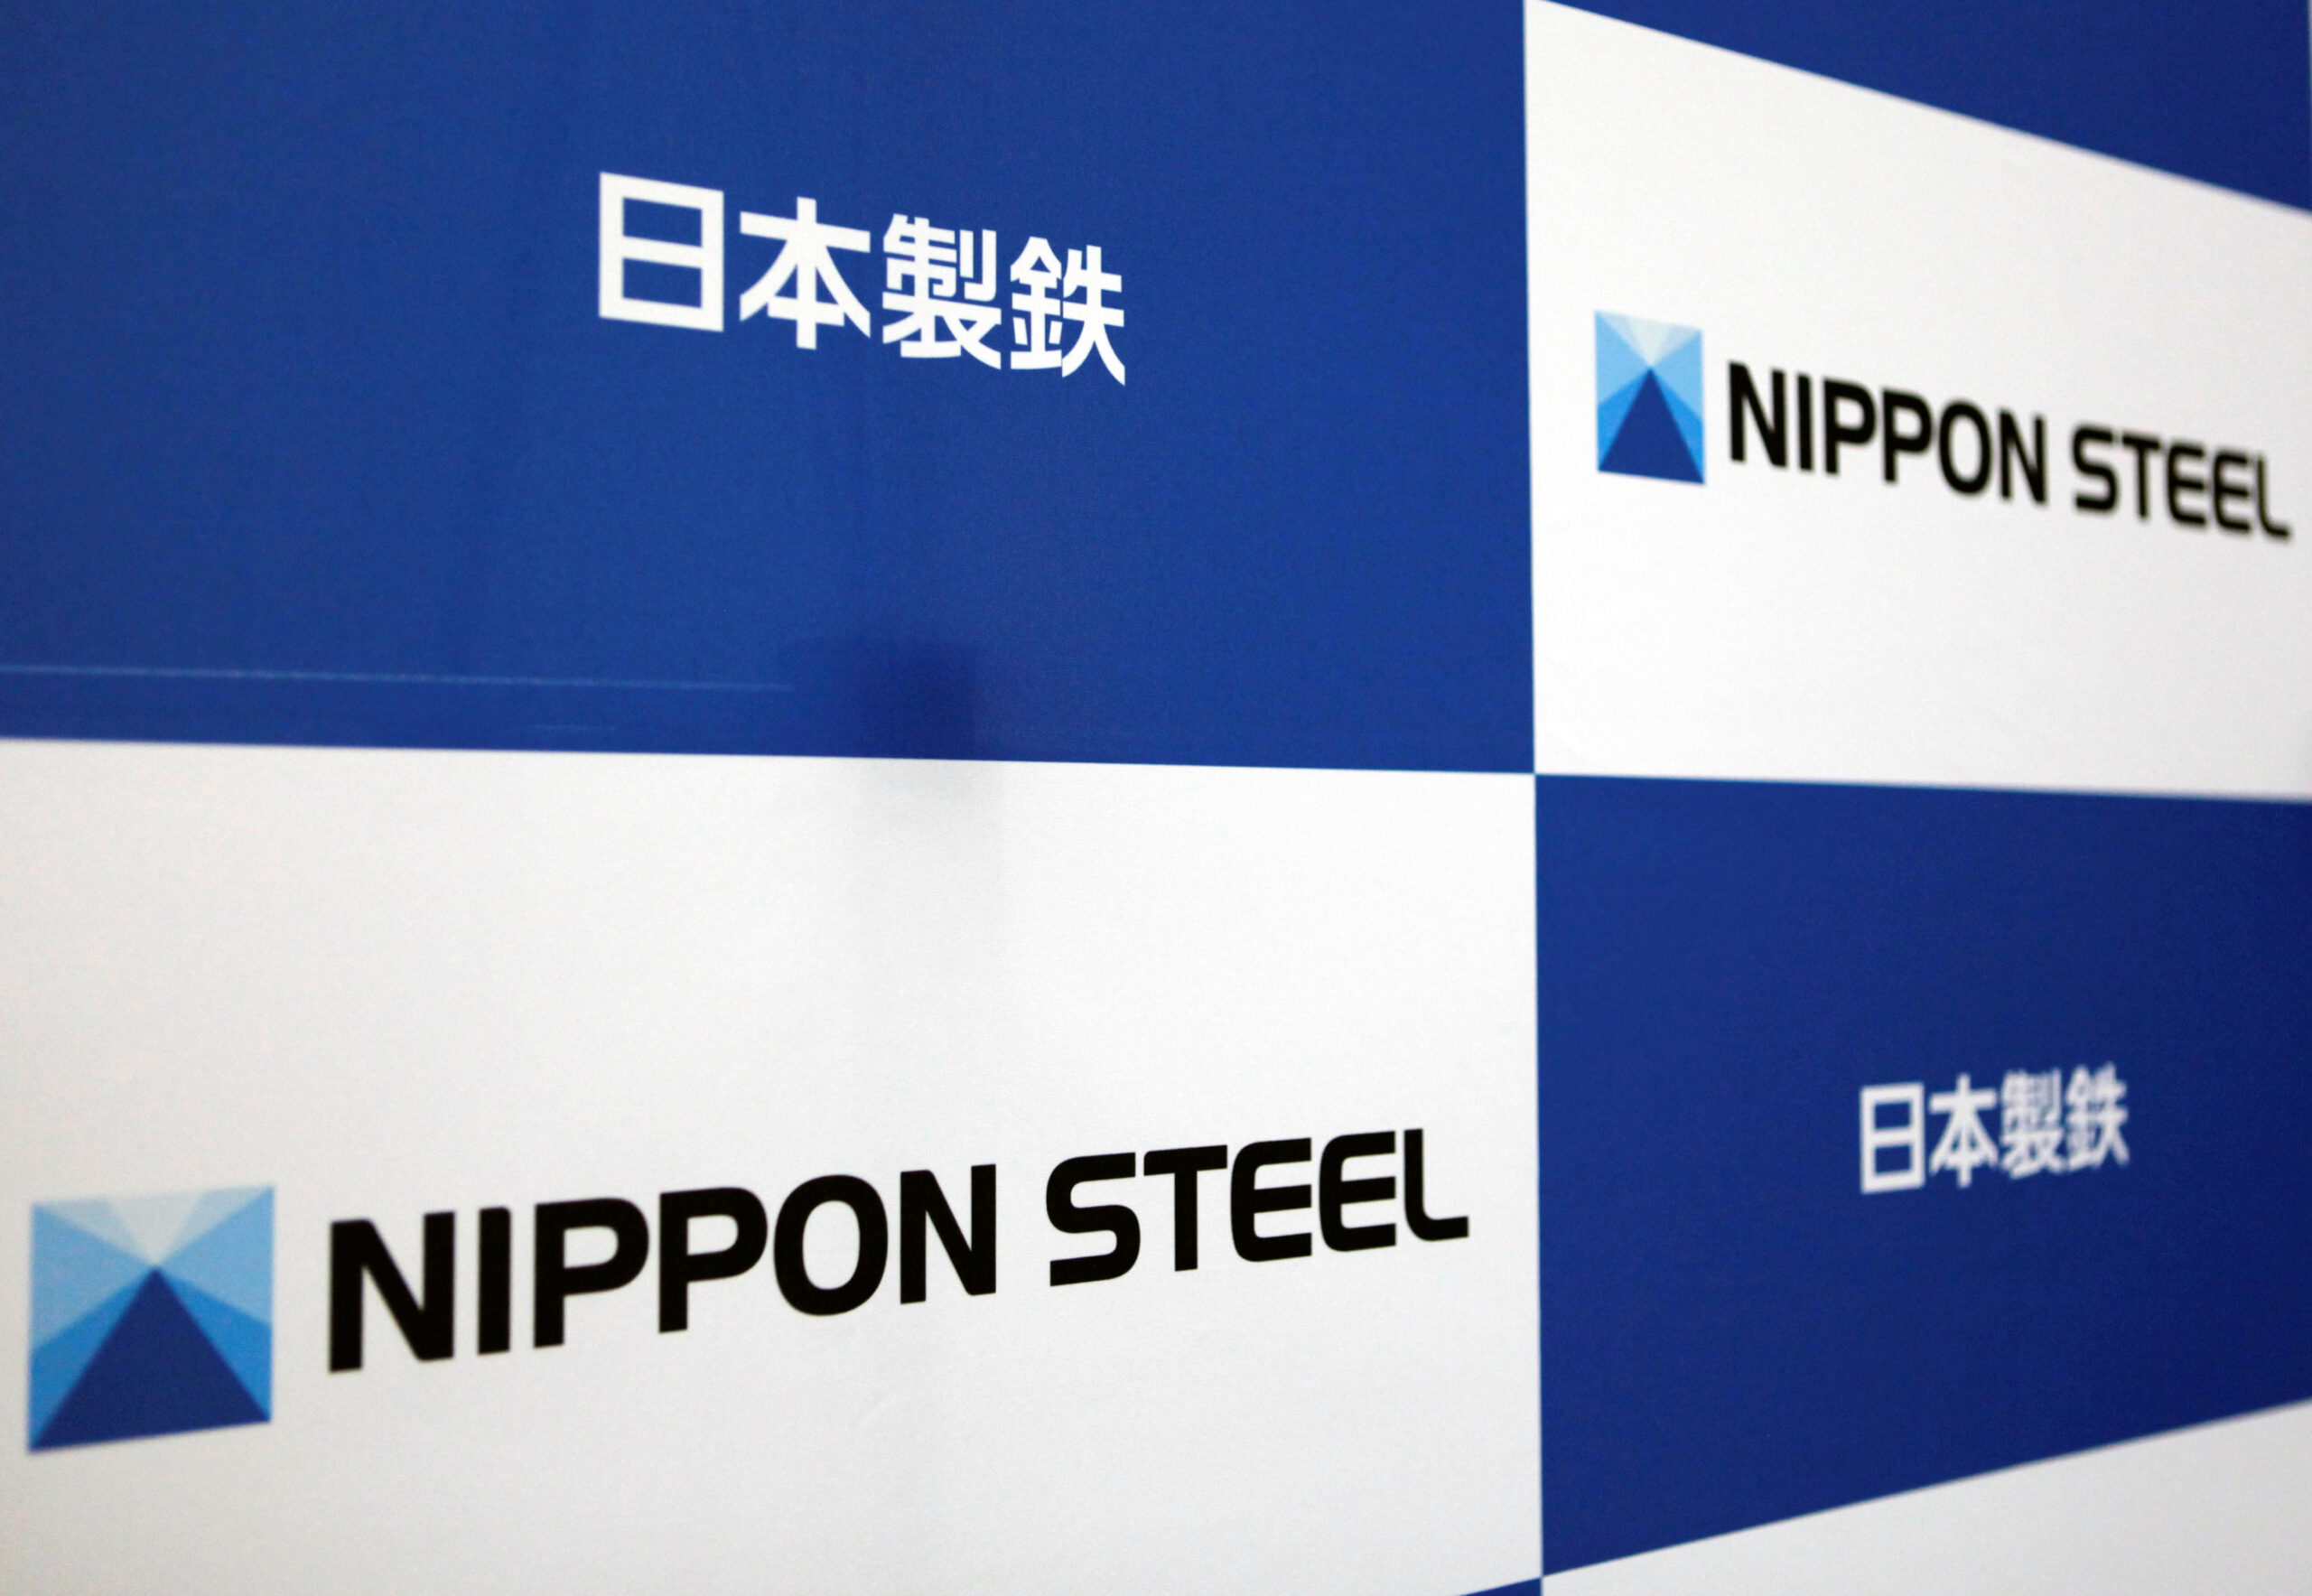 Nippon Steel's Bold Move: Acquiring U.S. Steel